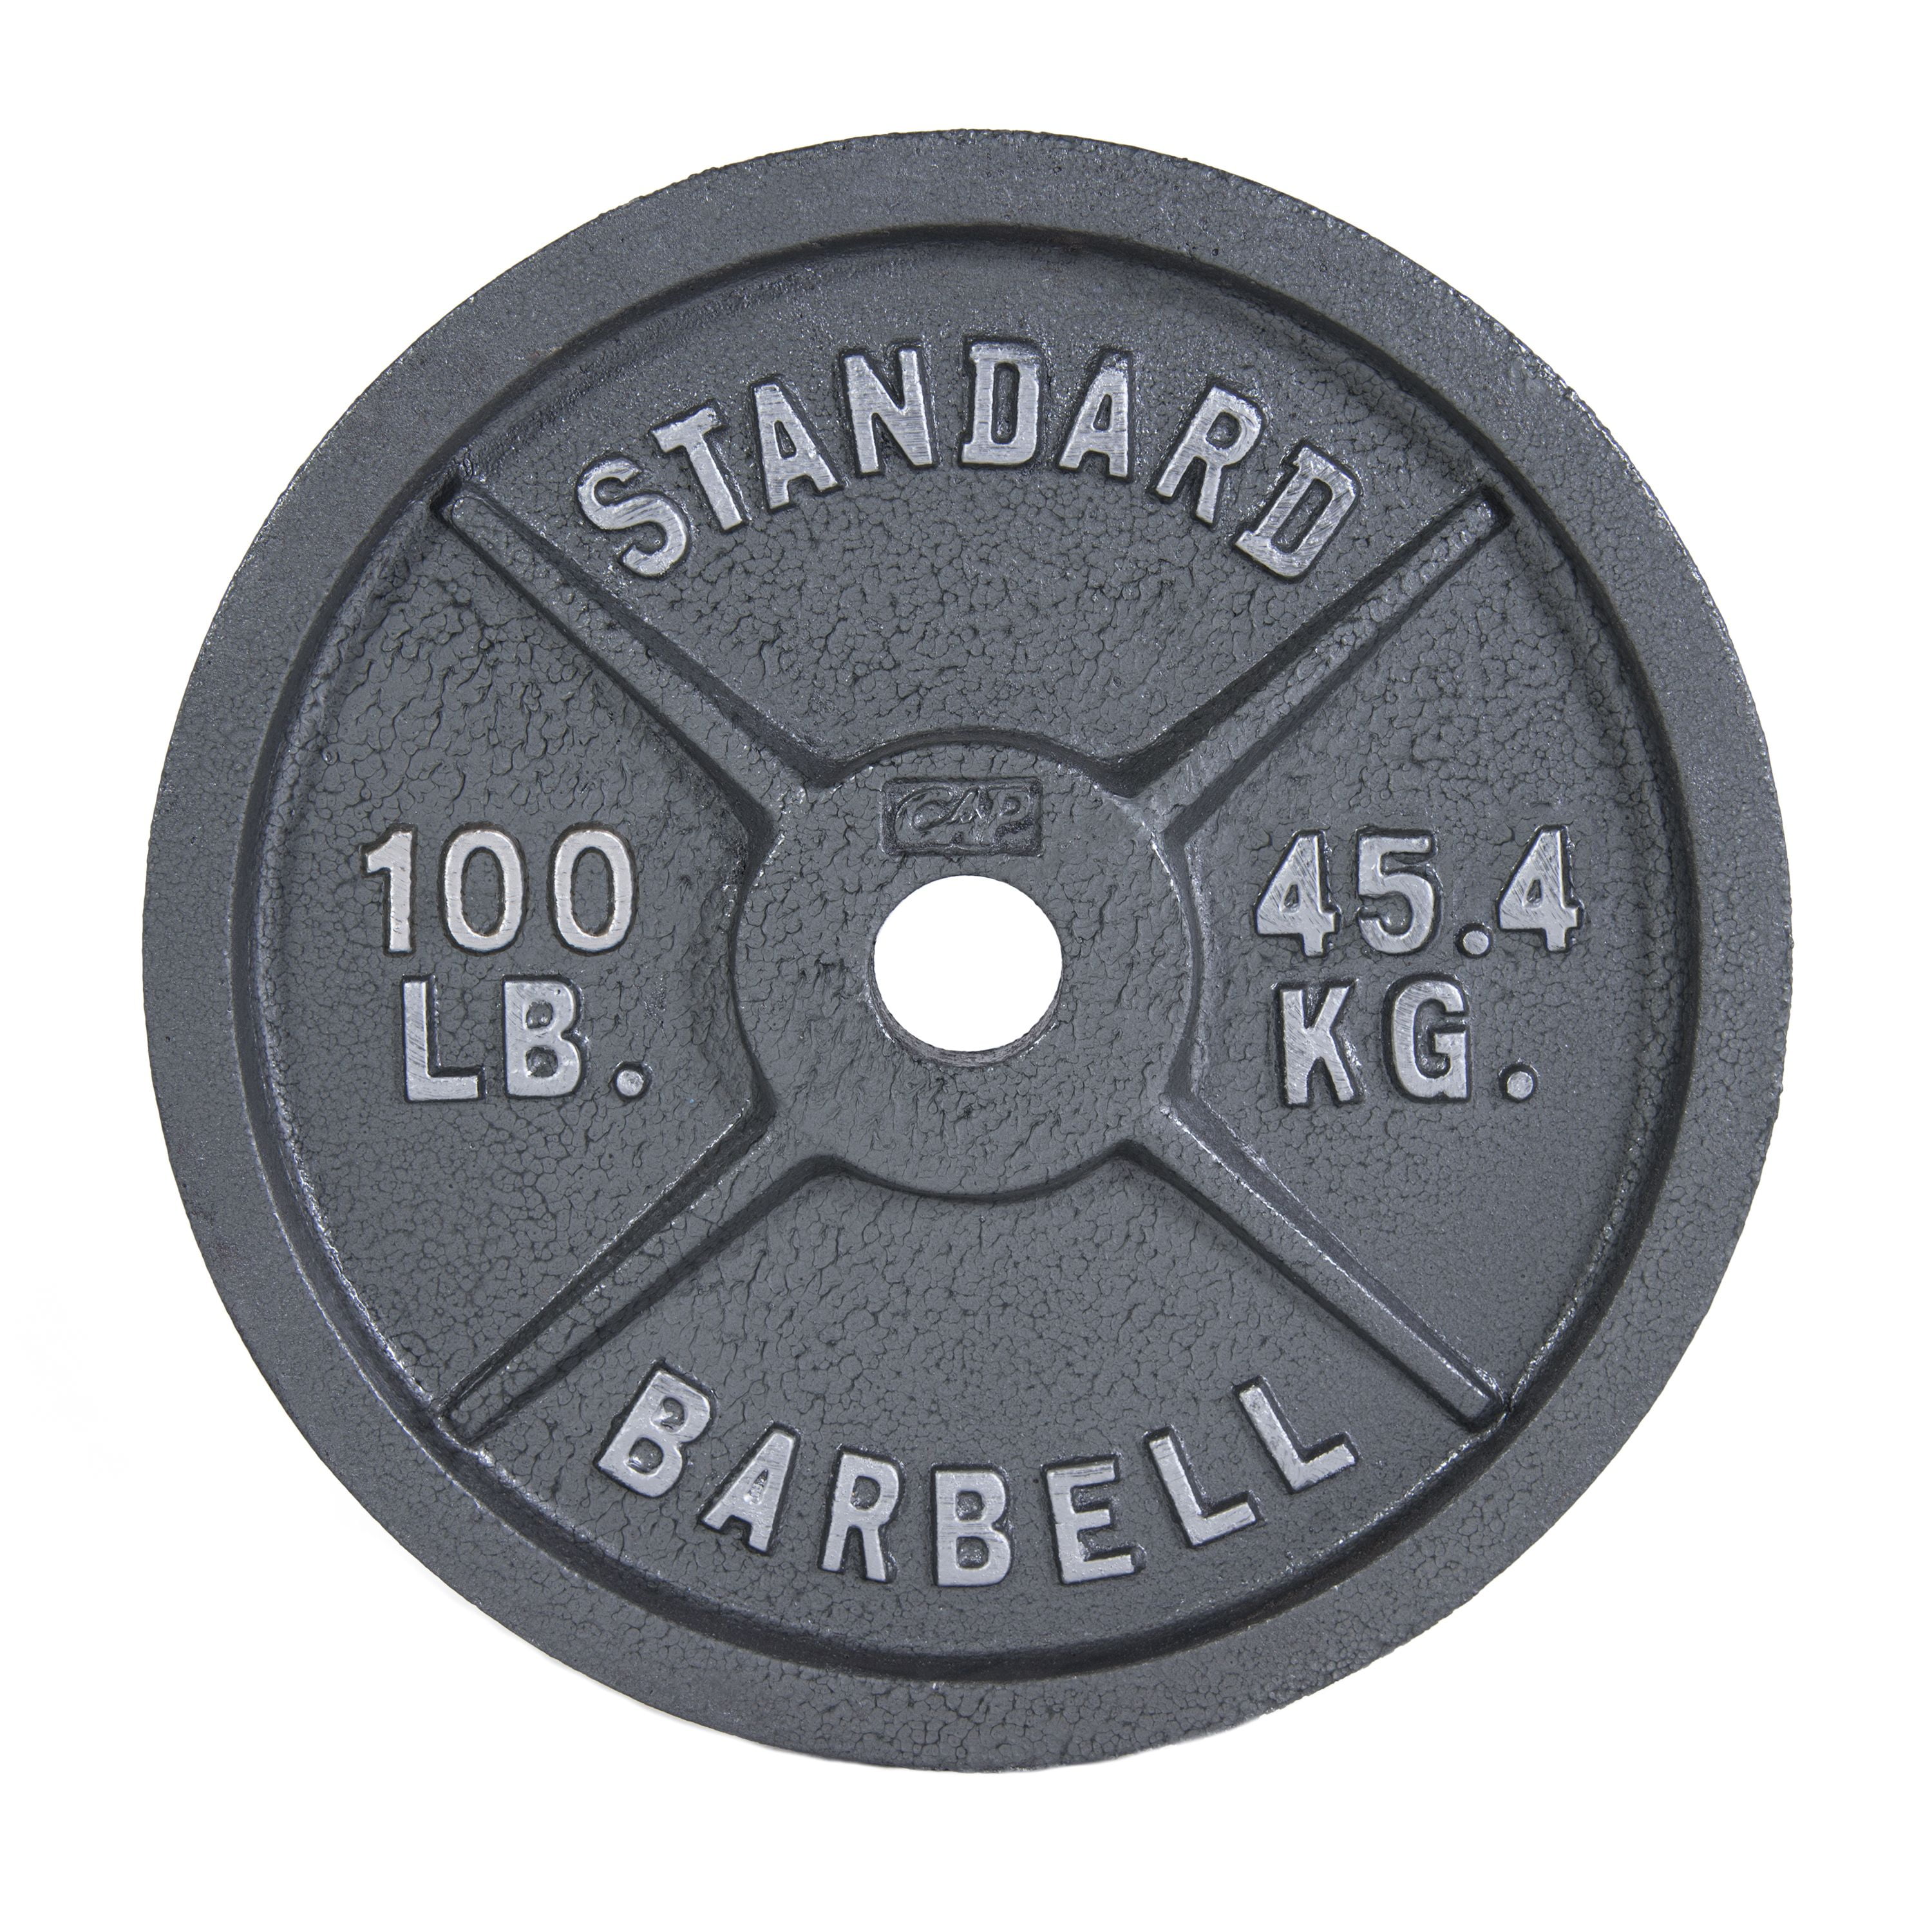 Cast Iron Plates - Barbell Standard - Elite